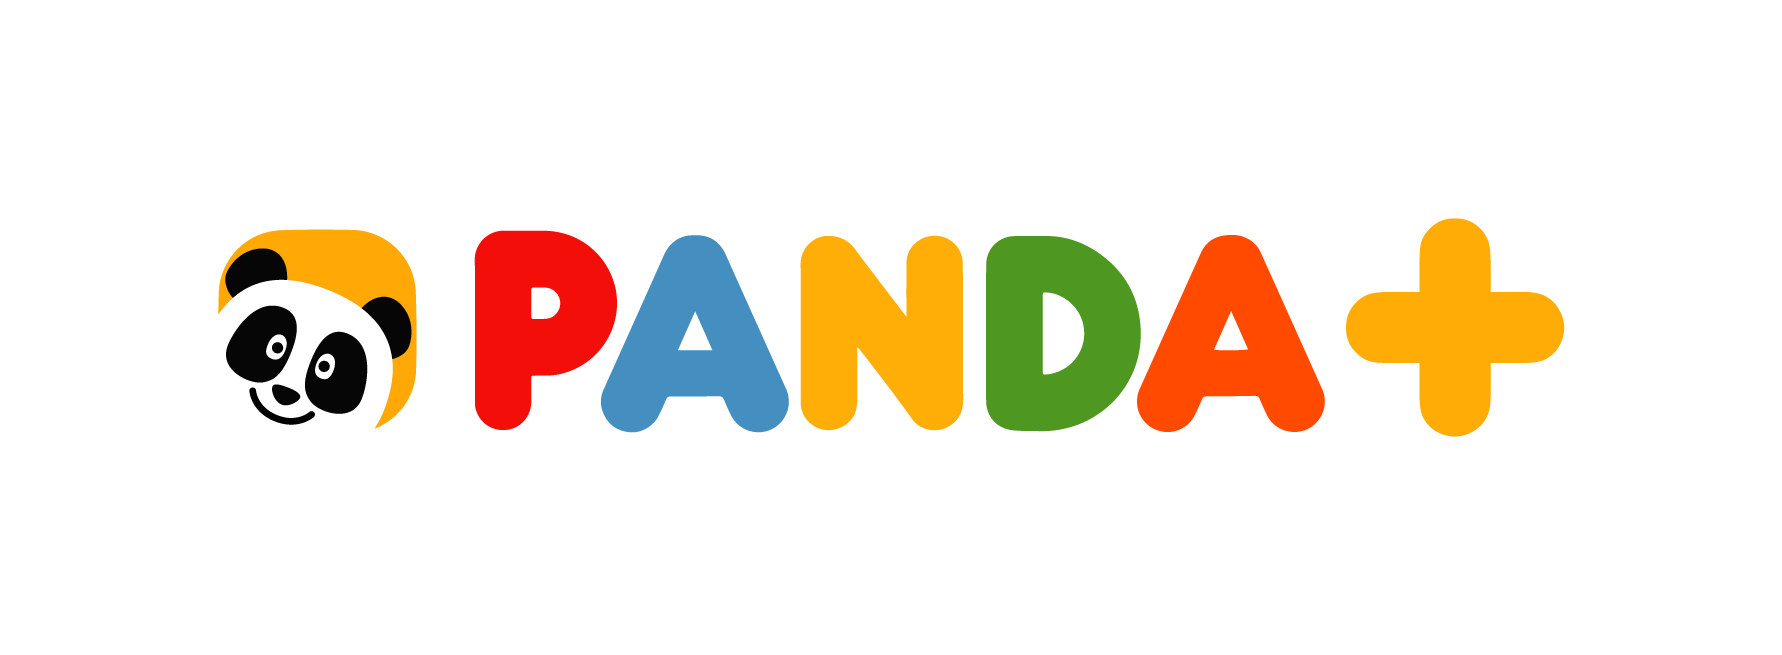 Os Mini Poderosos - Canal Panda Portugal